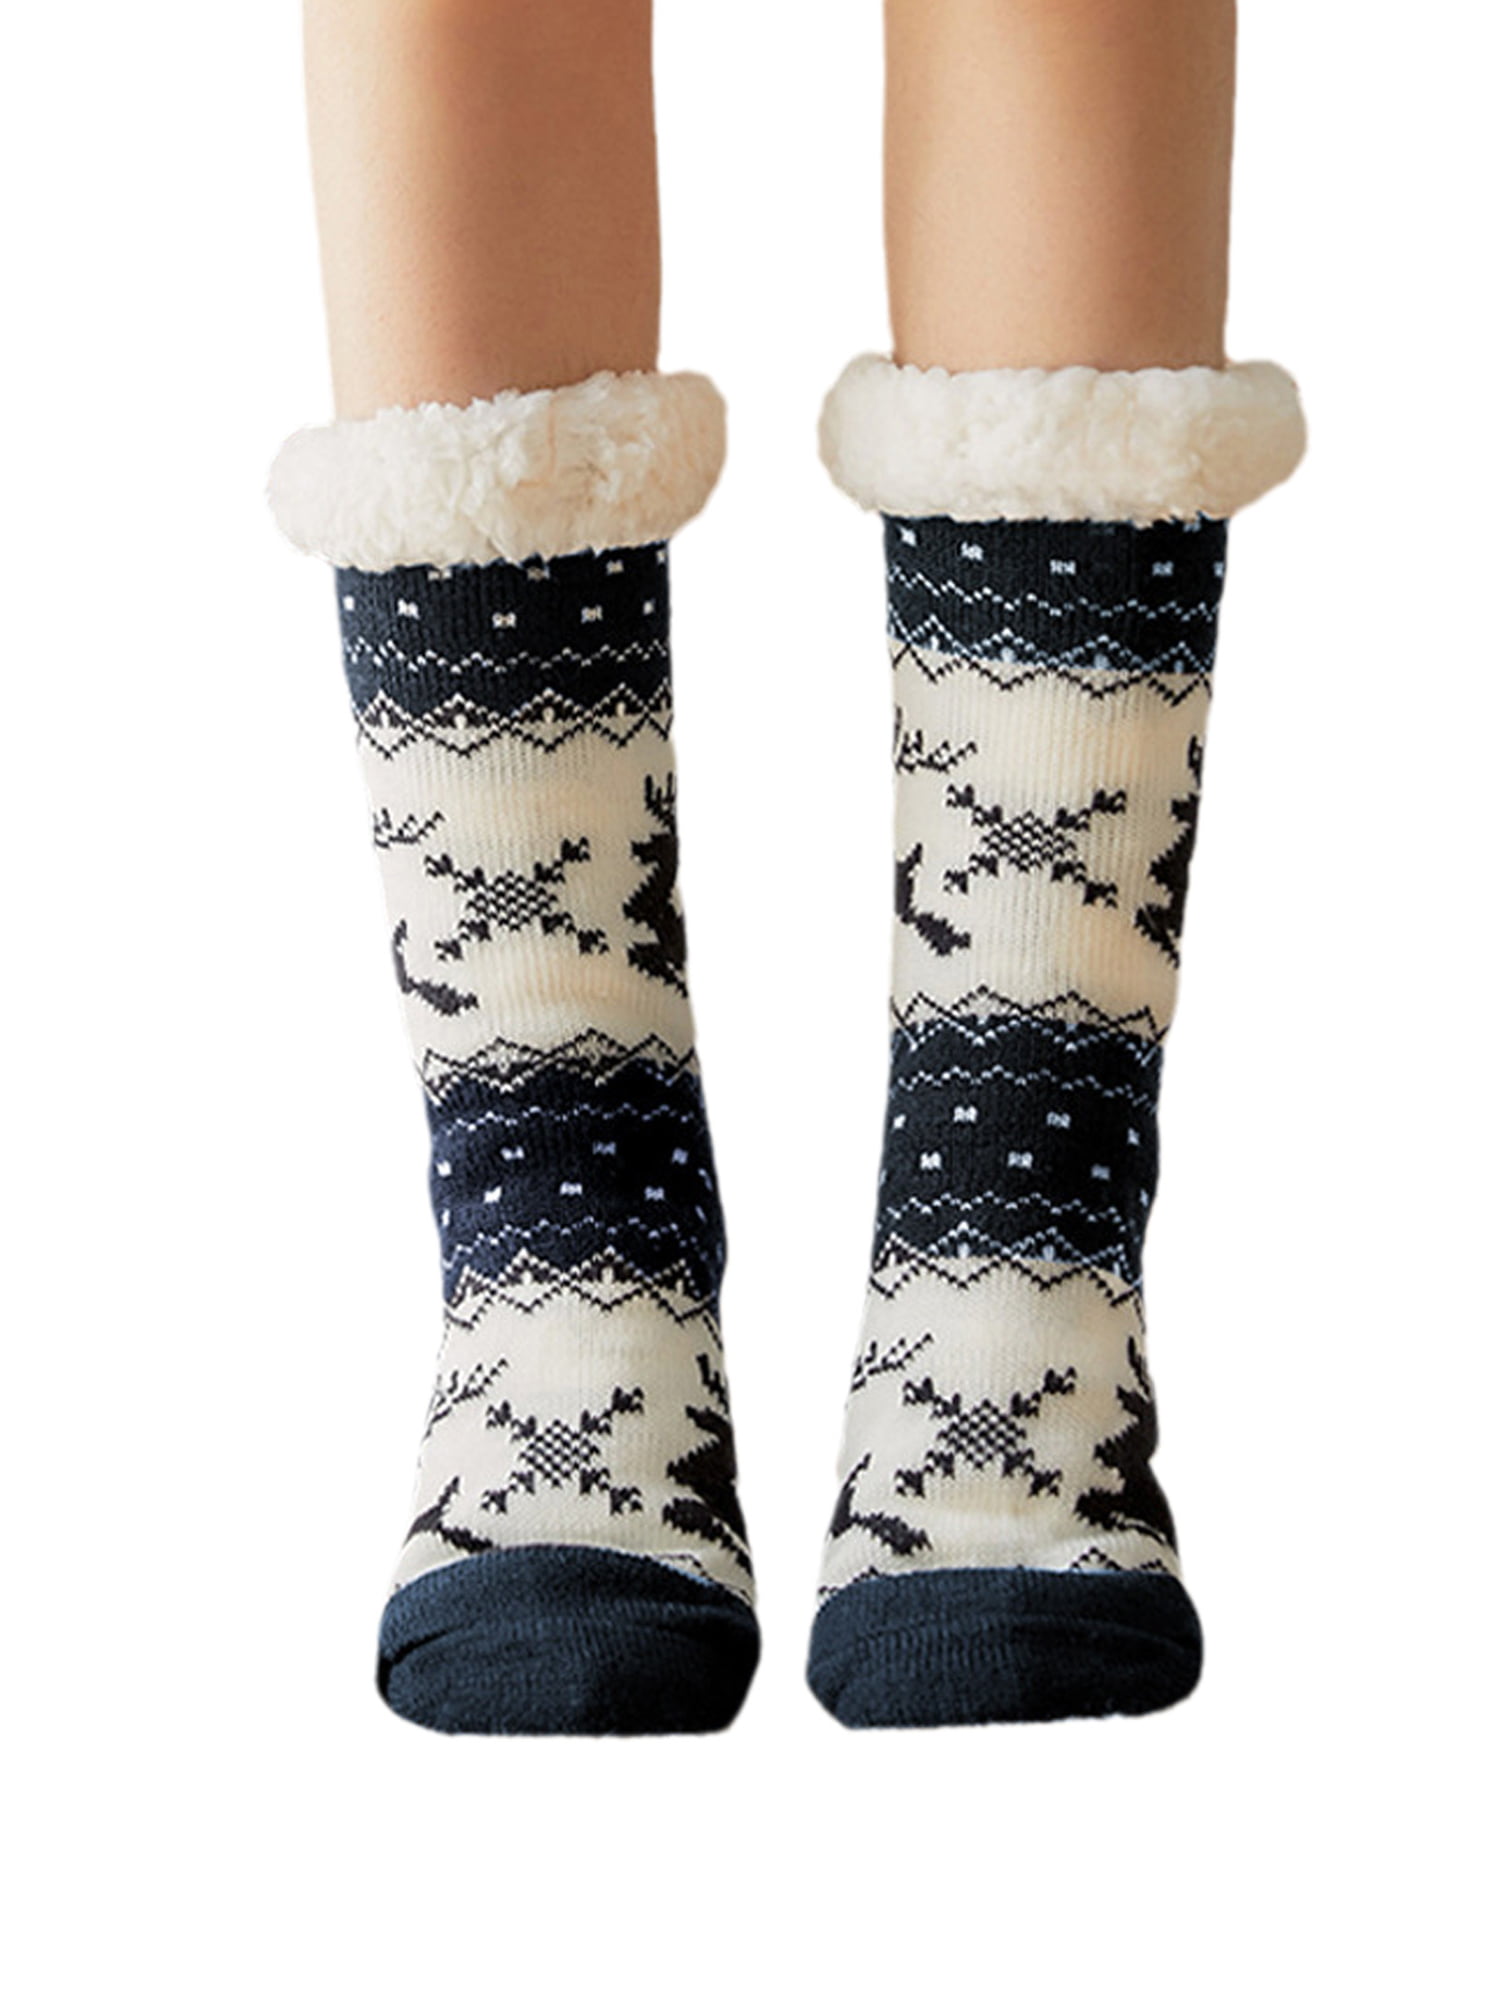 Adult Slippers Socks Warm Sleep Autumn and Winter Women's Carpet Tube Foot 4pair